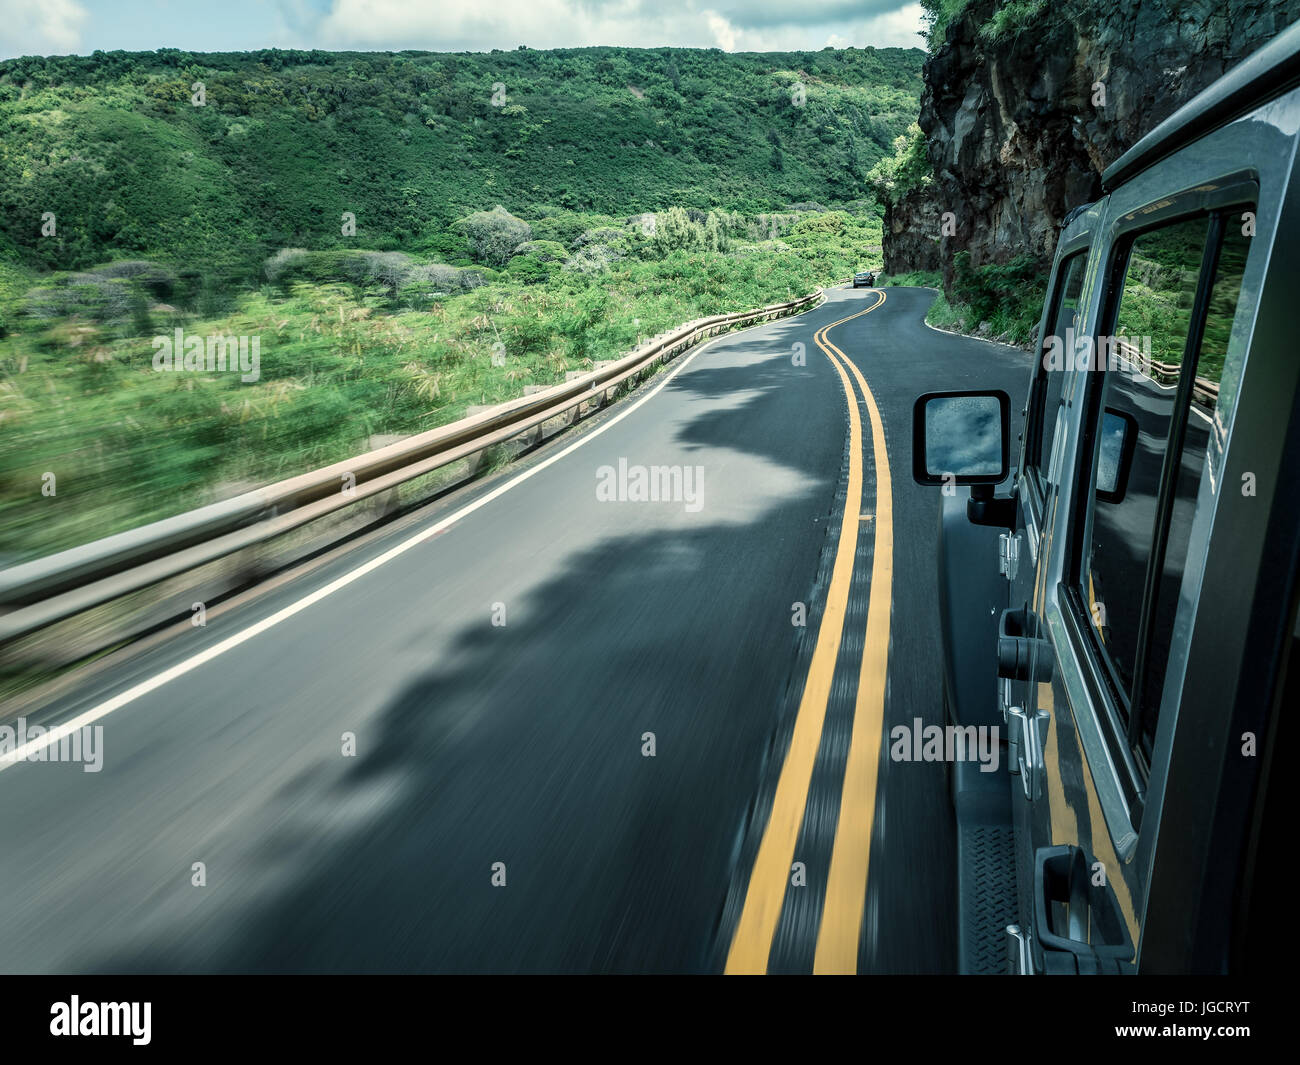 4x4 vehicle driving along a road, Maui, Hawaii, United States Stock Photo